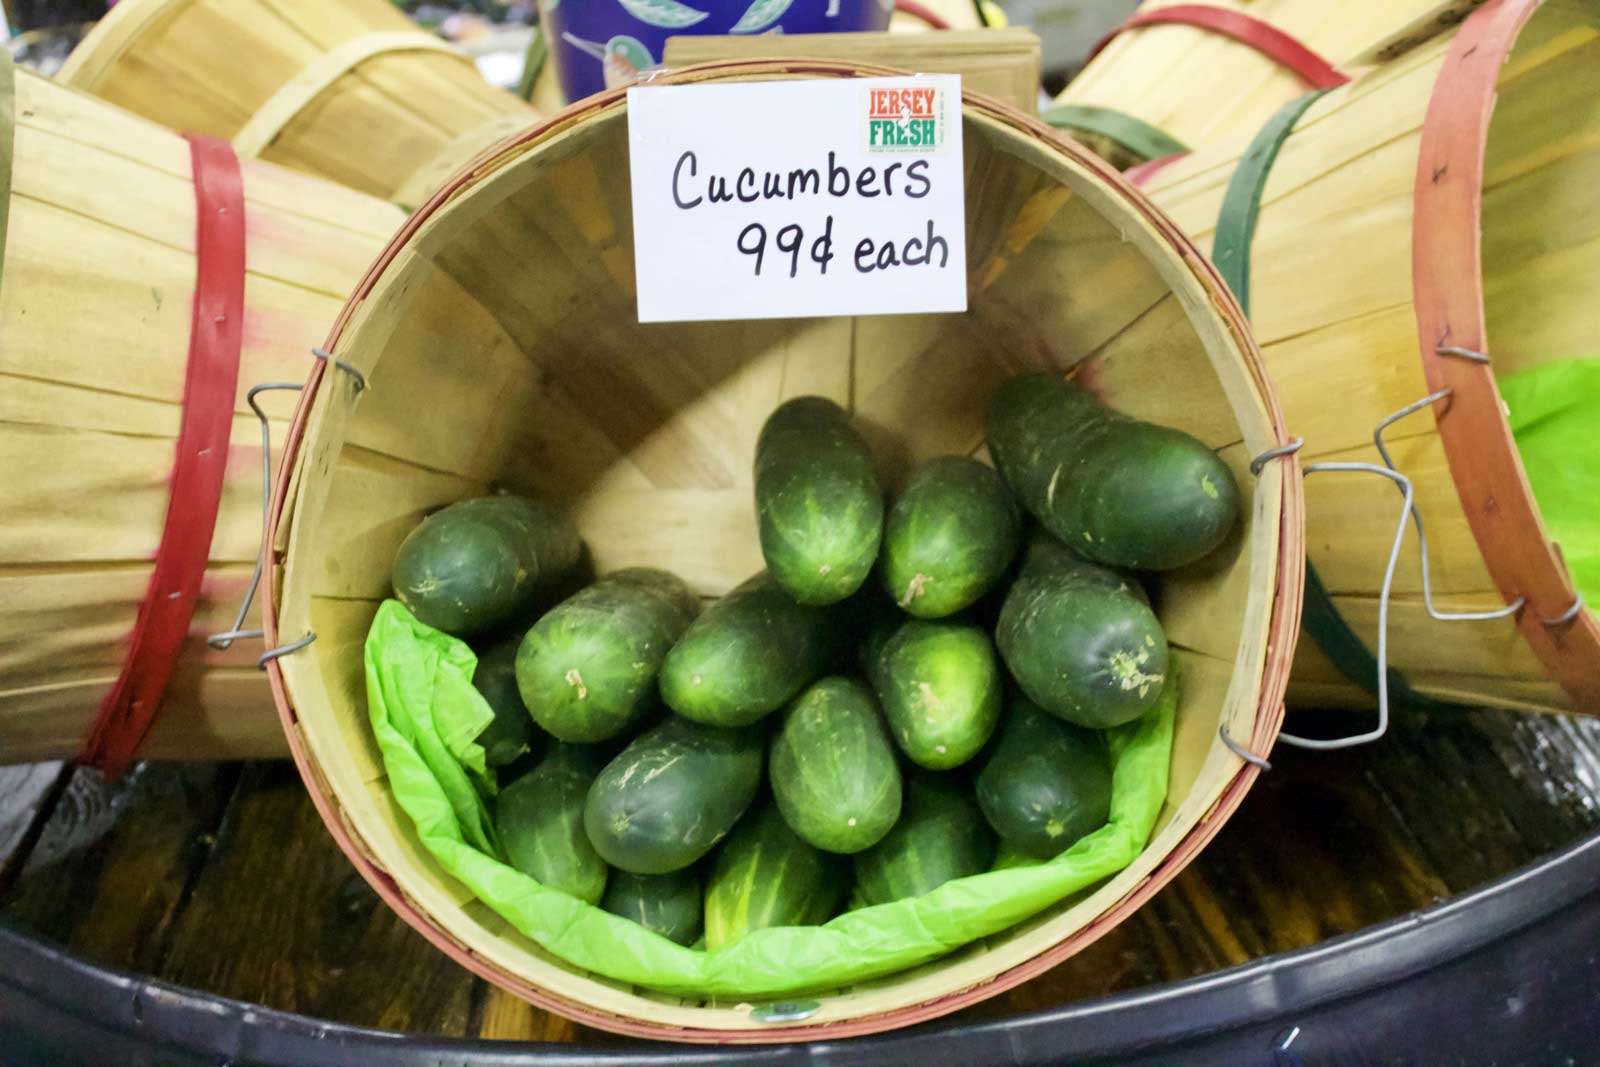 Cucumbers and Fresh Produce at the Farmers Market in RIdgewood NJ